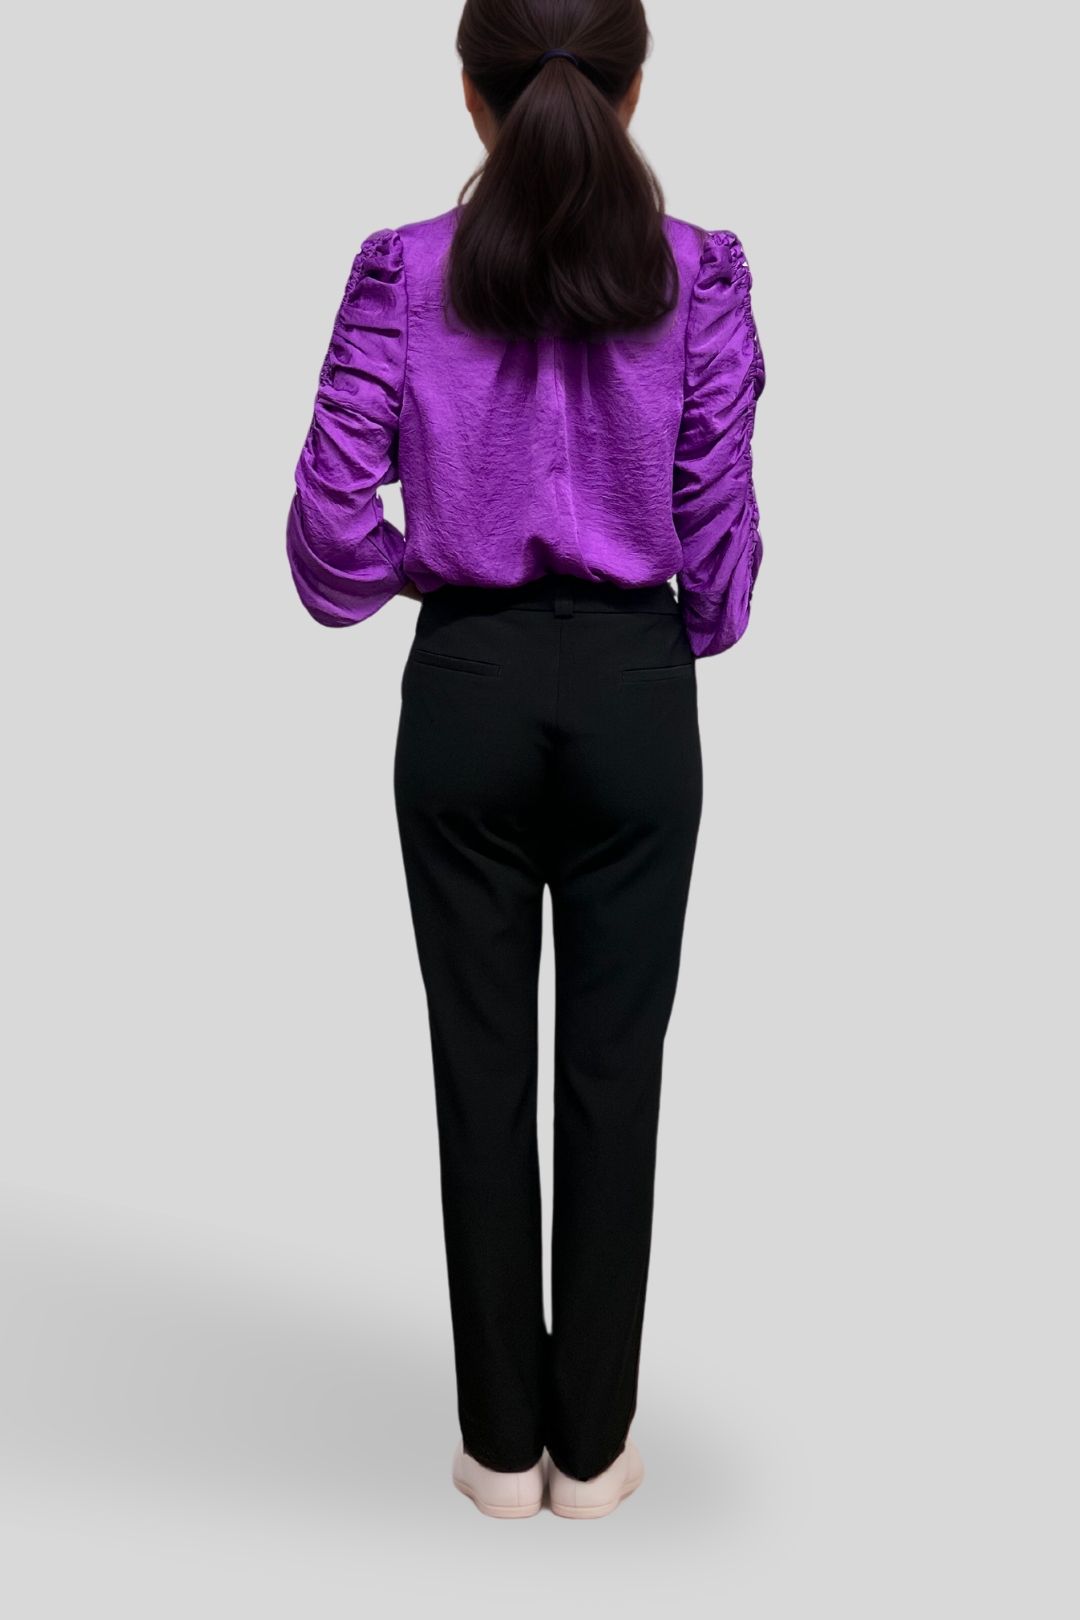 Dress Hire casual Veronika Maine - Straight Leg Pants Black